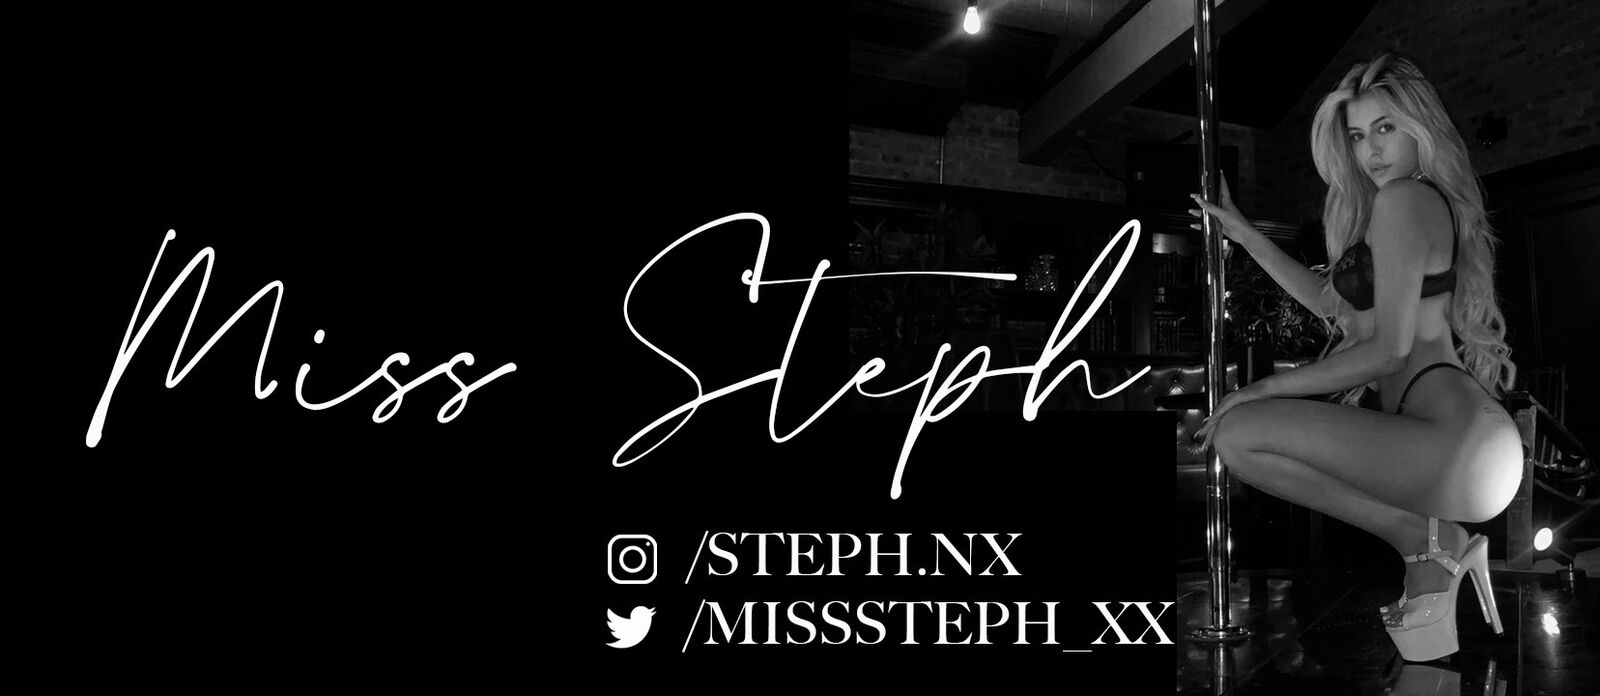 See Miss Steph x profile